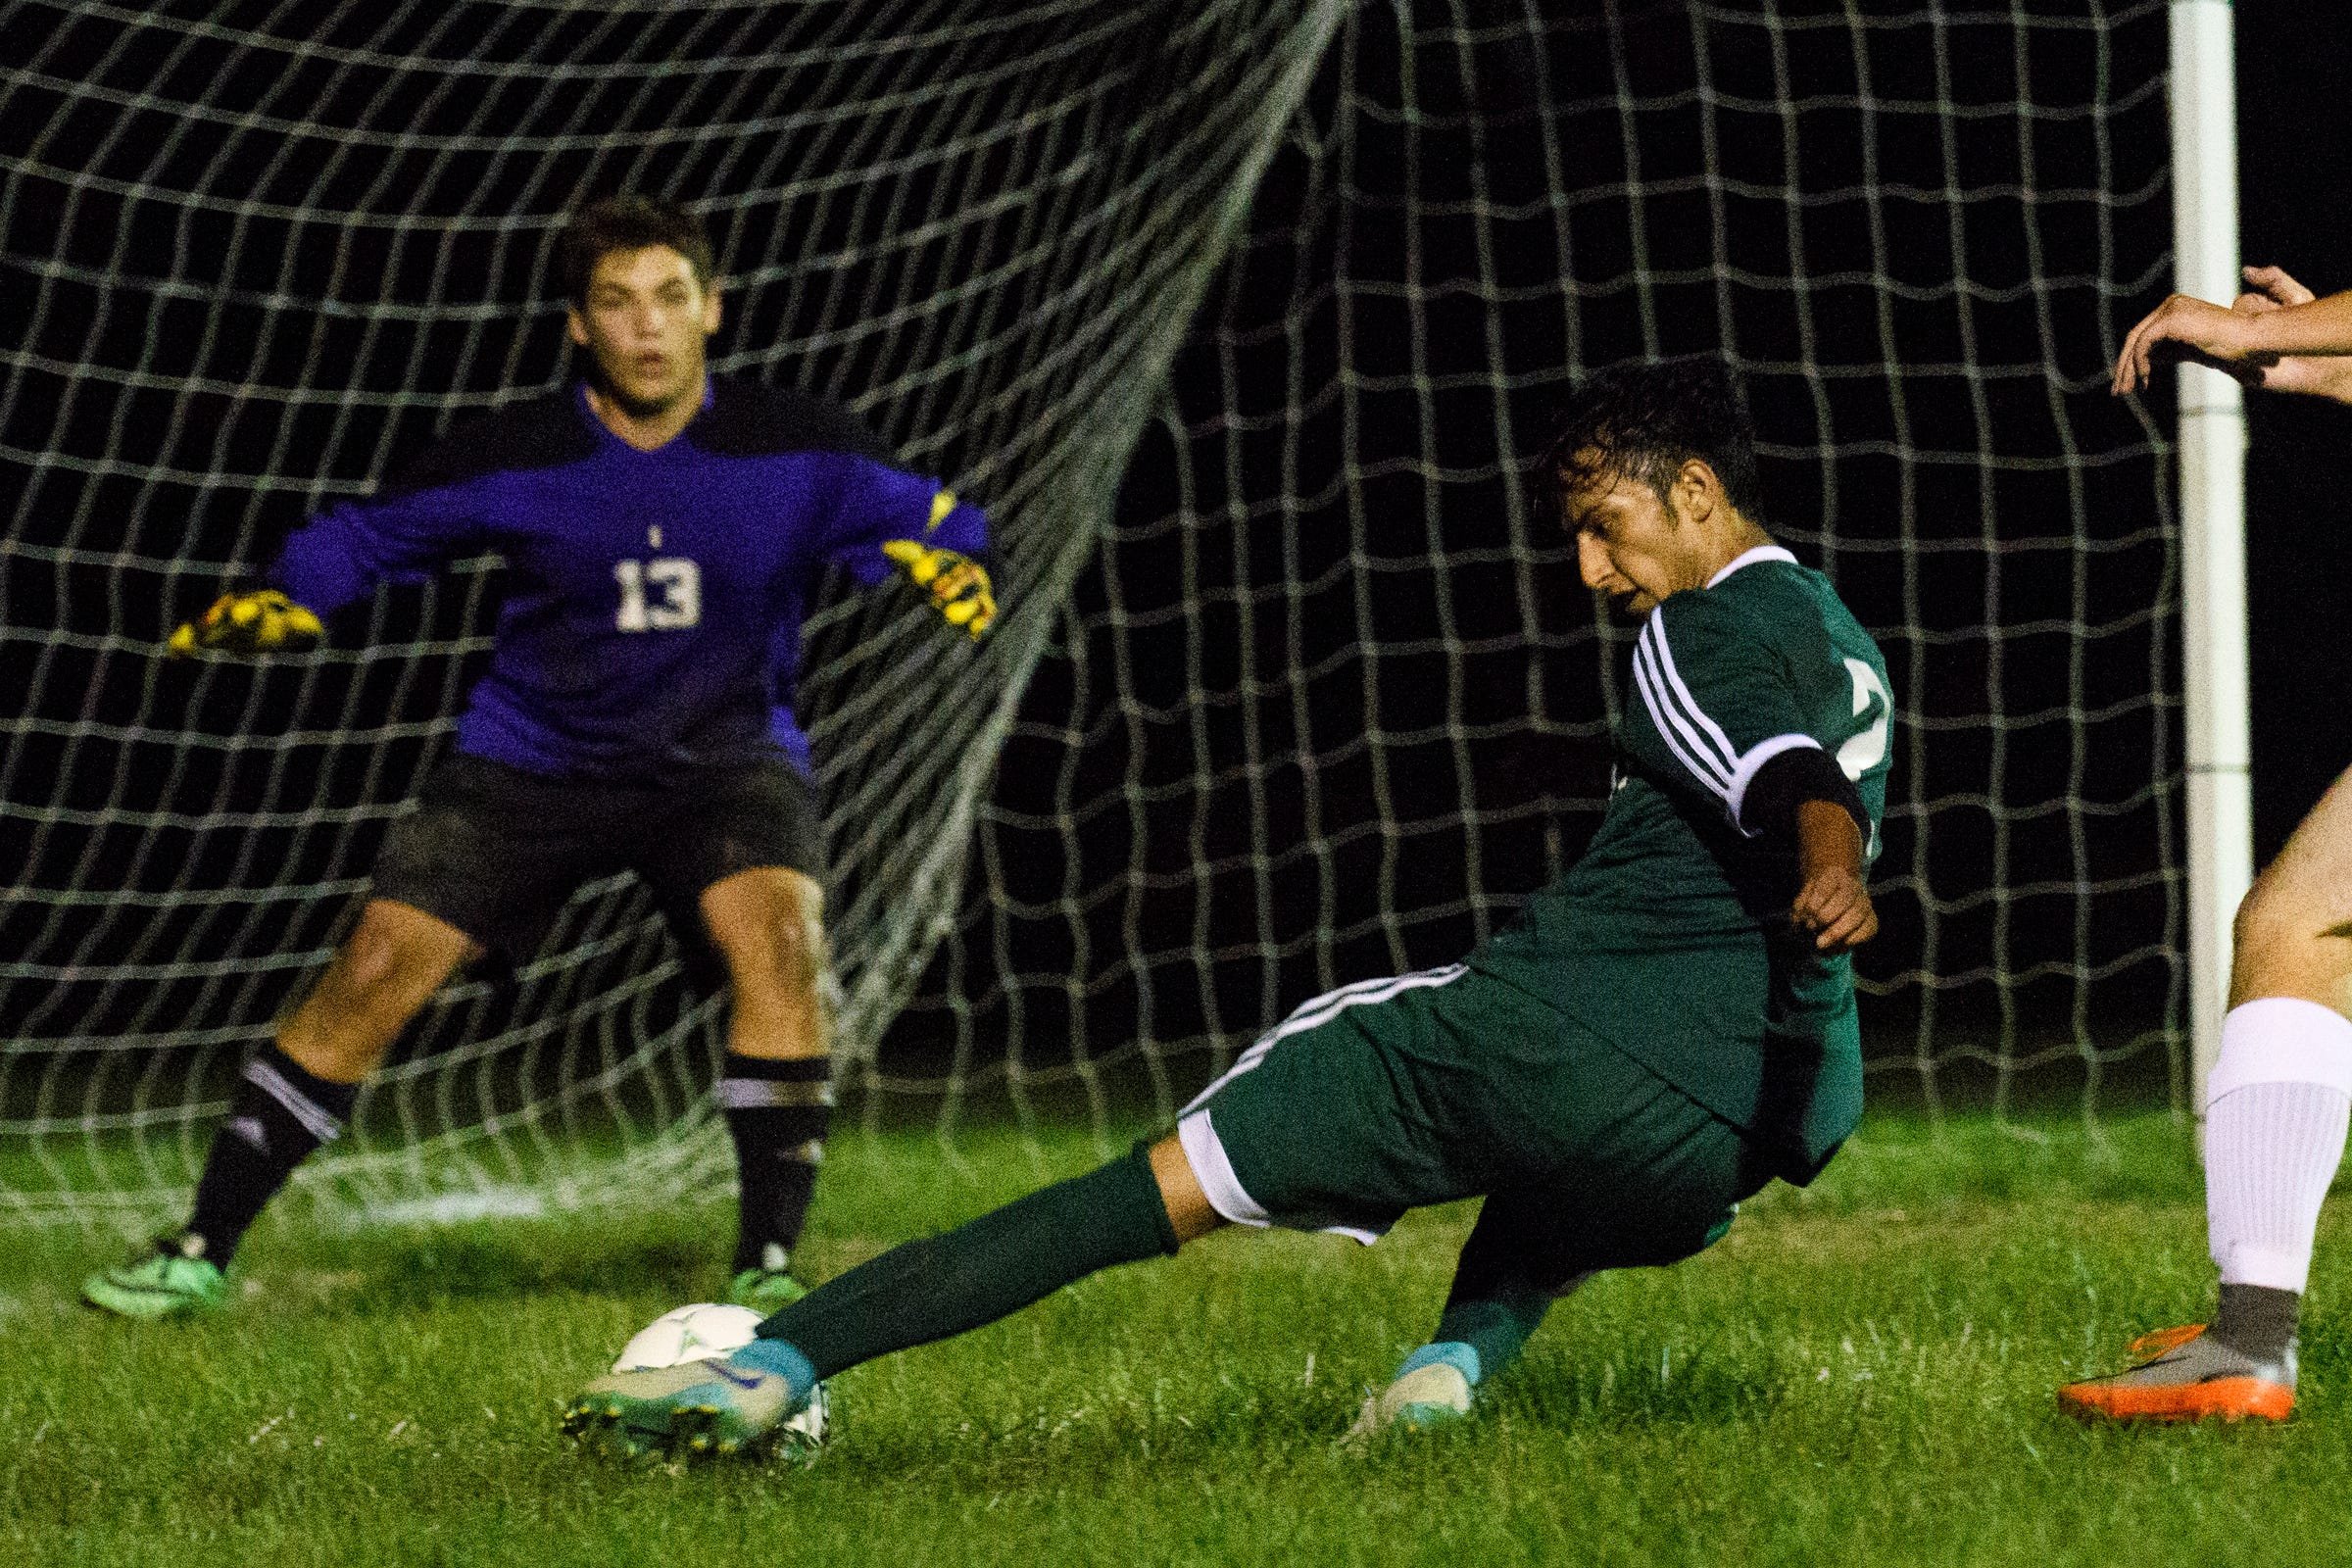 Vermont high school highlights: Luitel breaks soccer